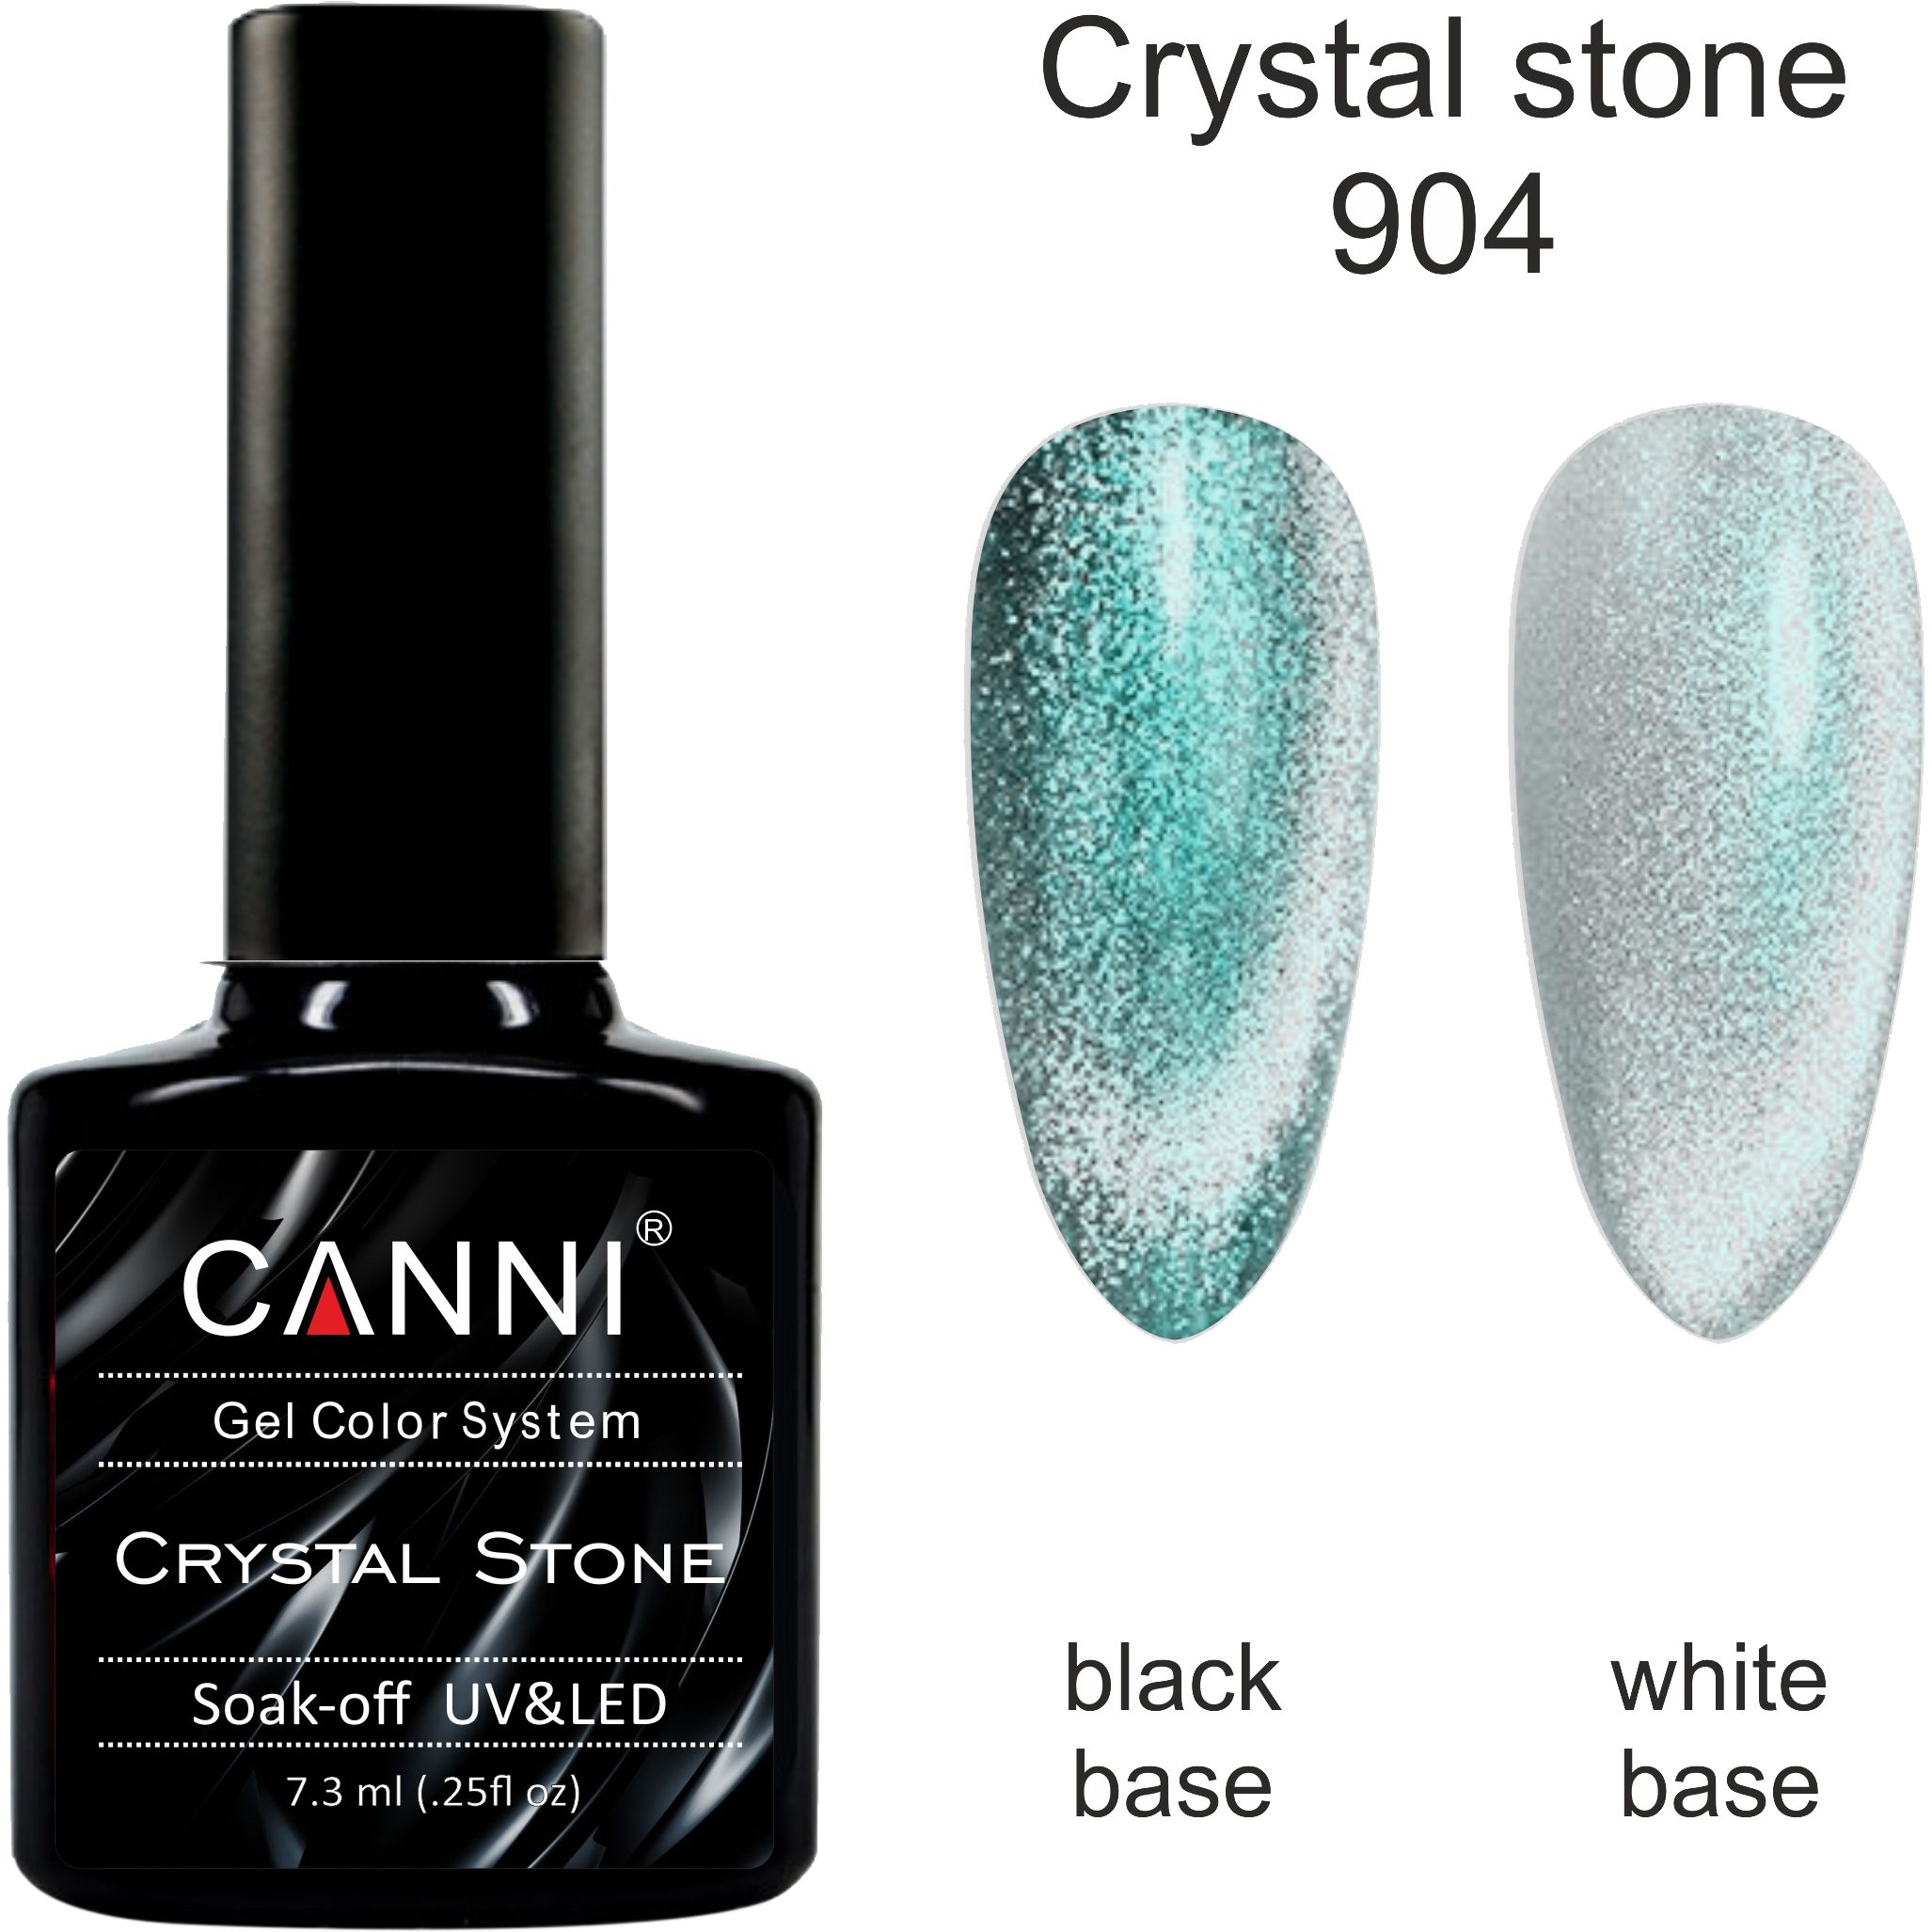 Гель-лак Canni Crystal Stone 904, 7.3 мл - фото 1